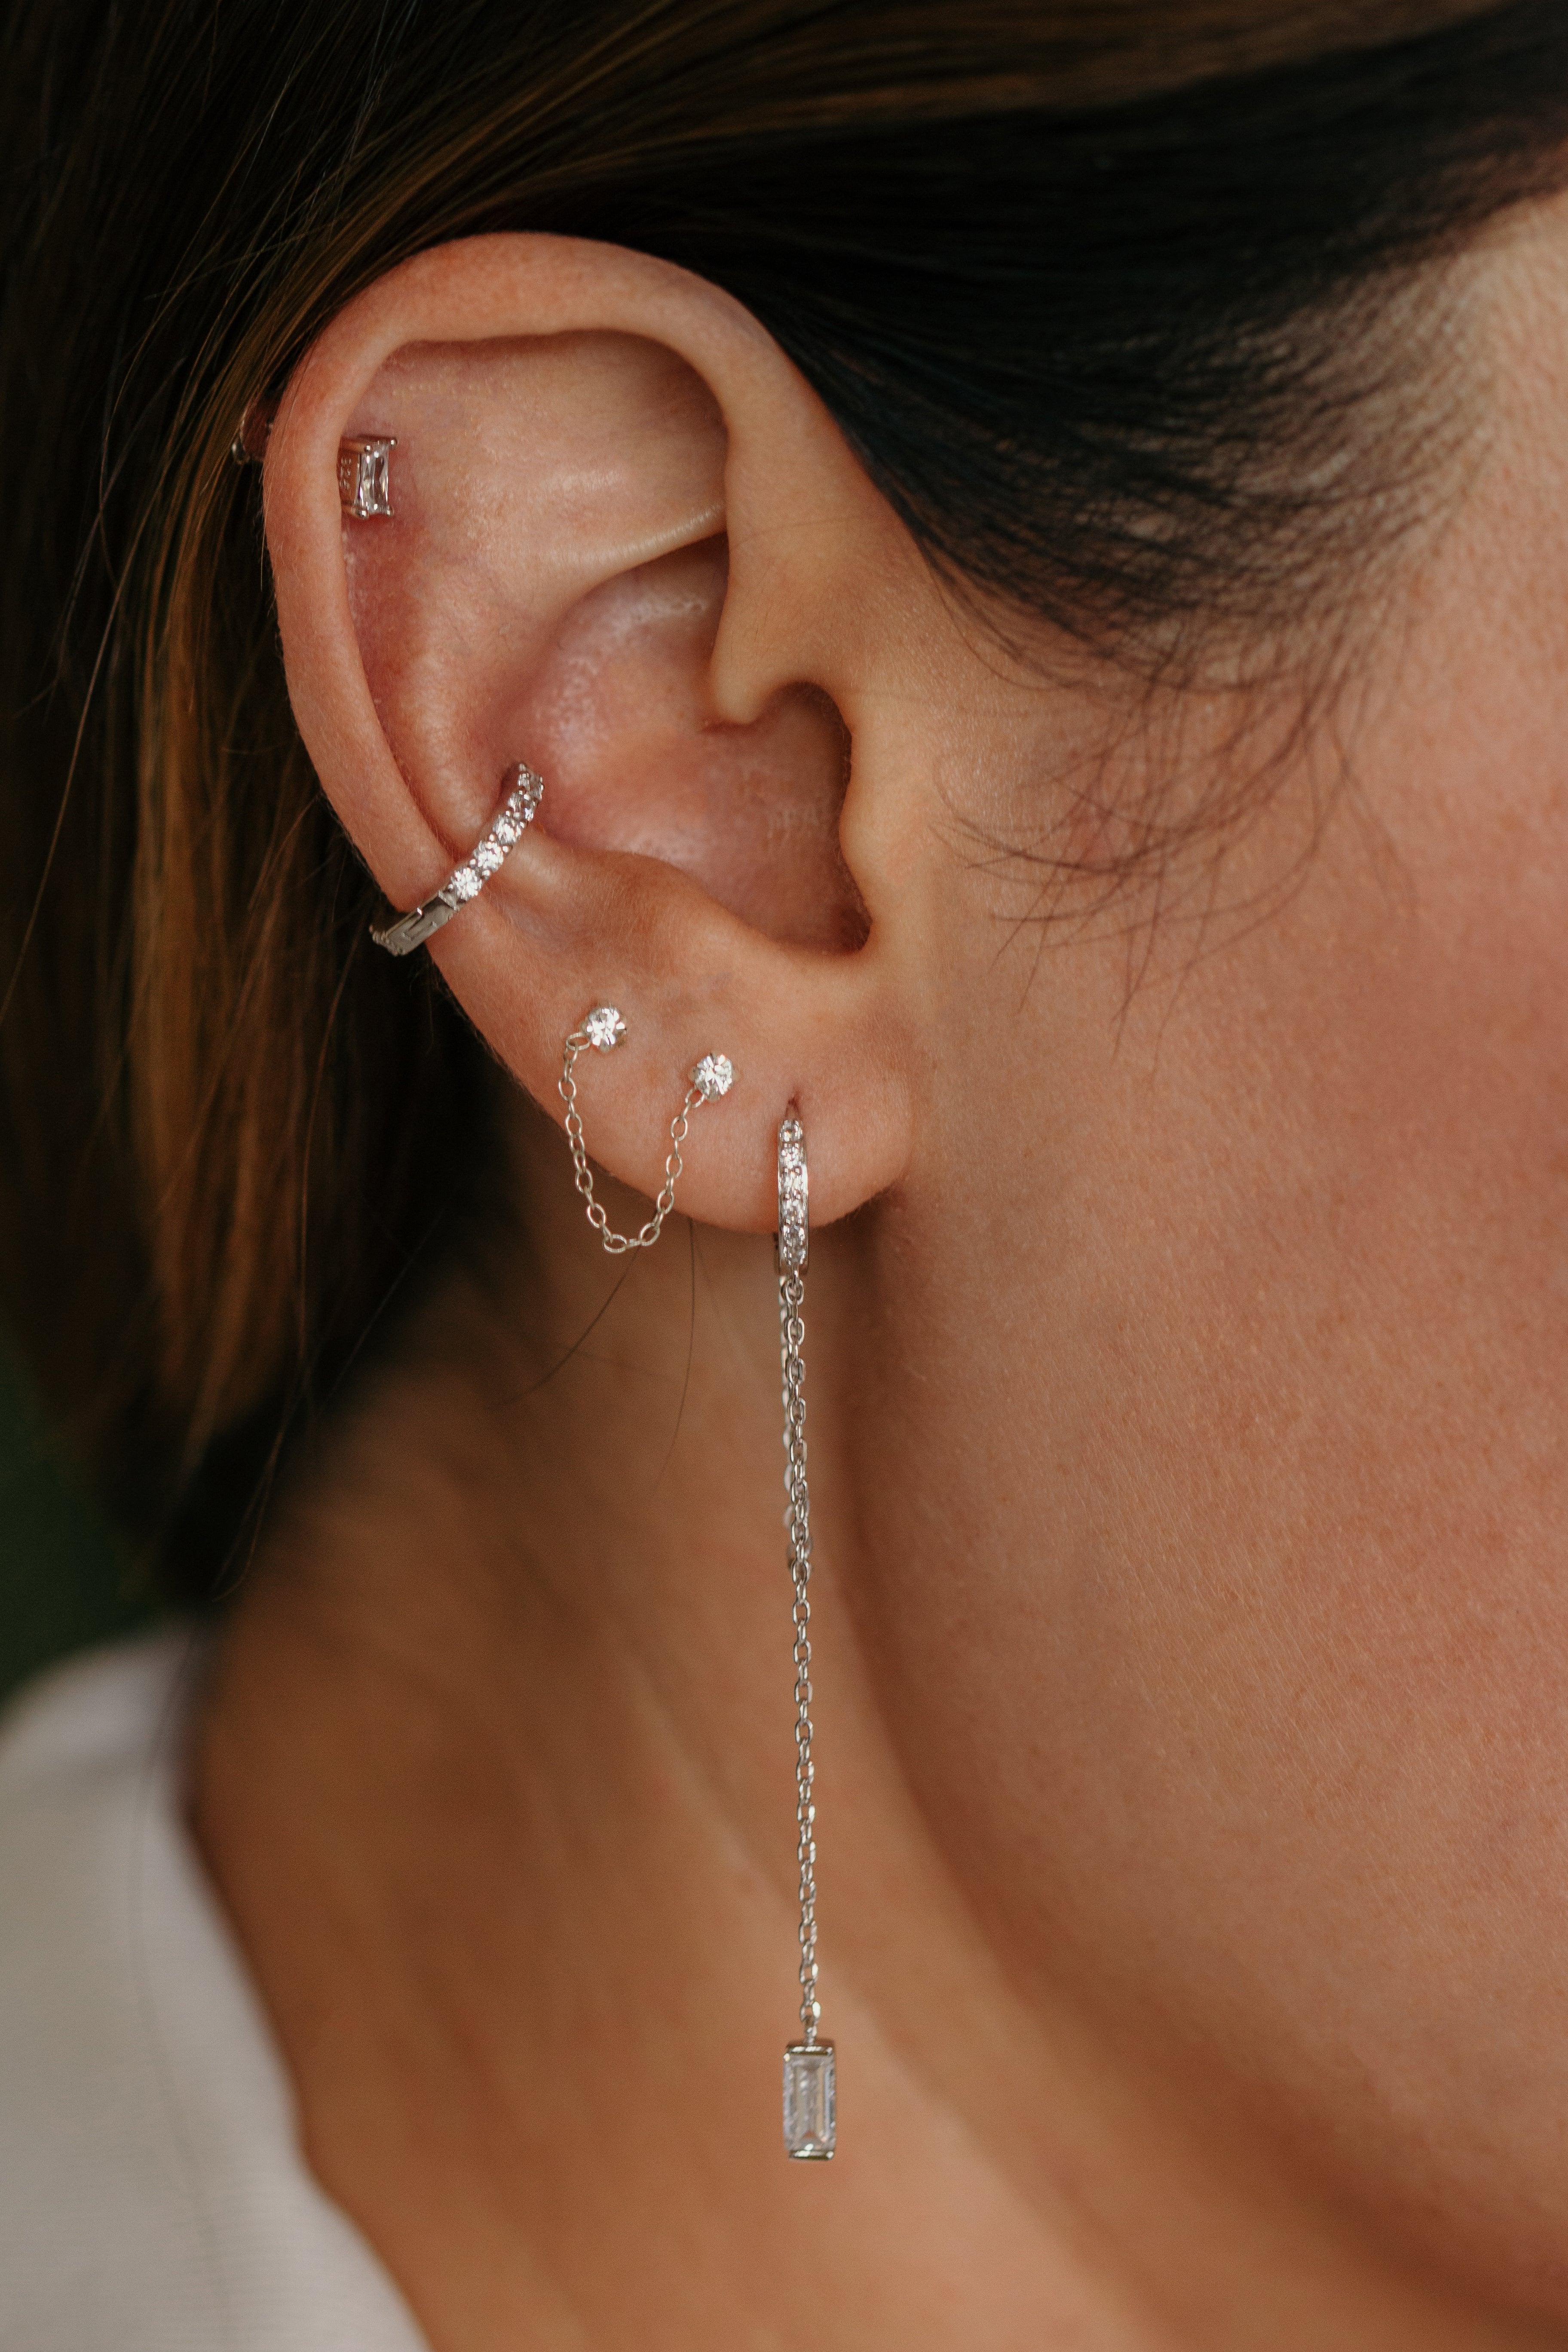 Double piercing earrings, multiple piercing connected earrings with chain